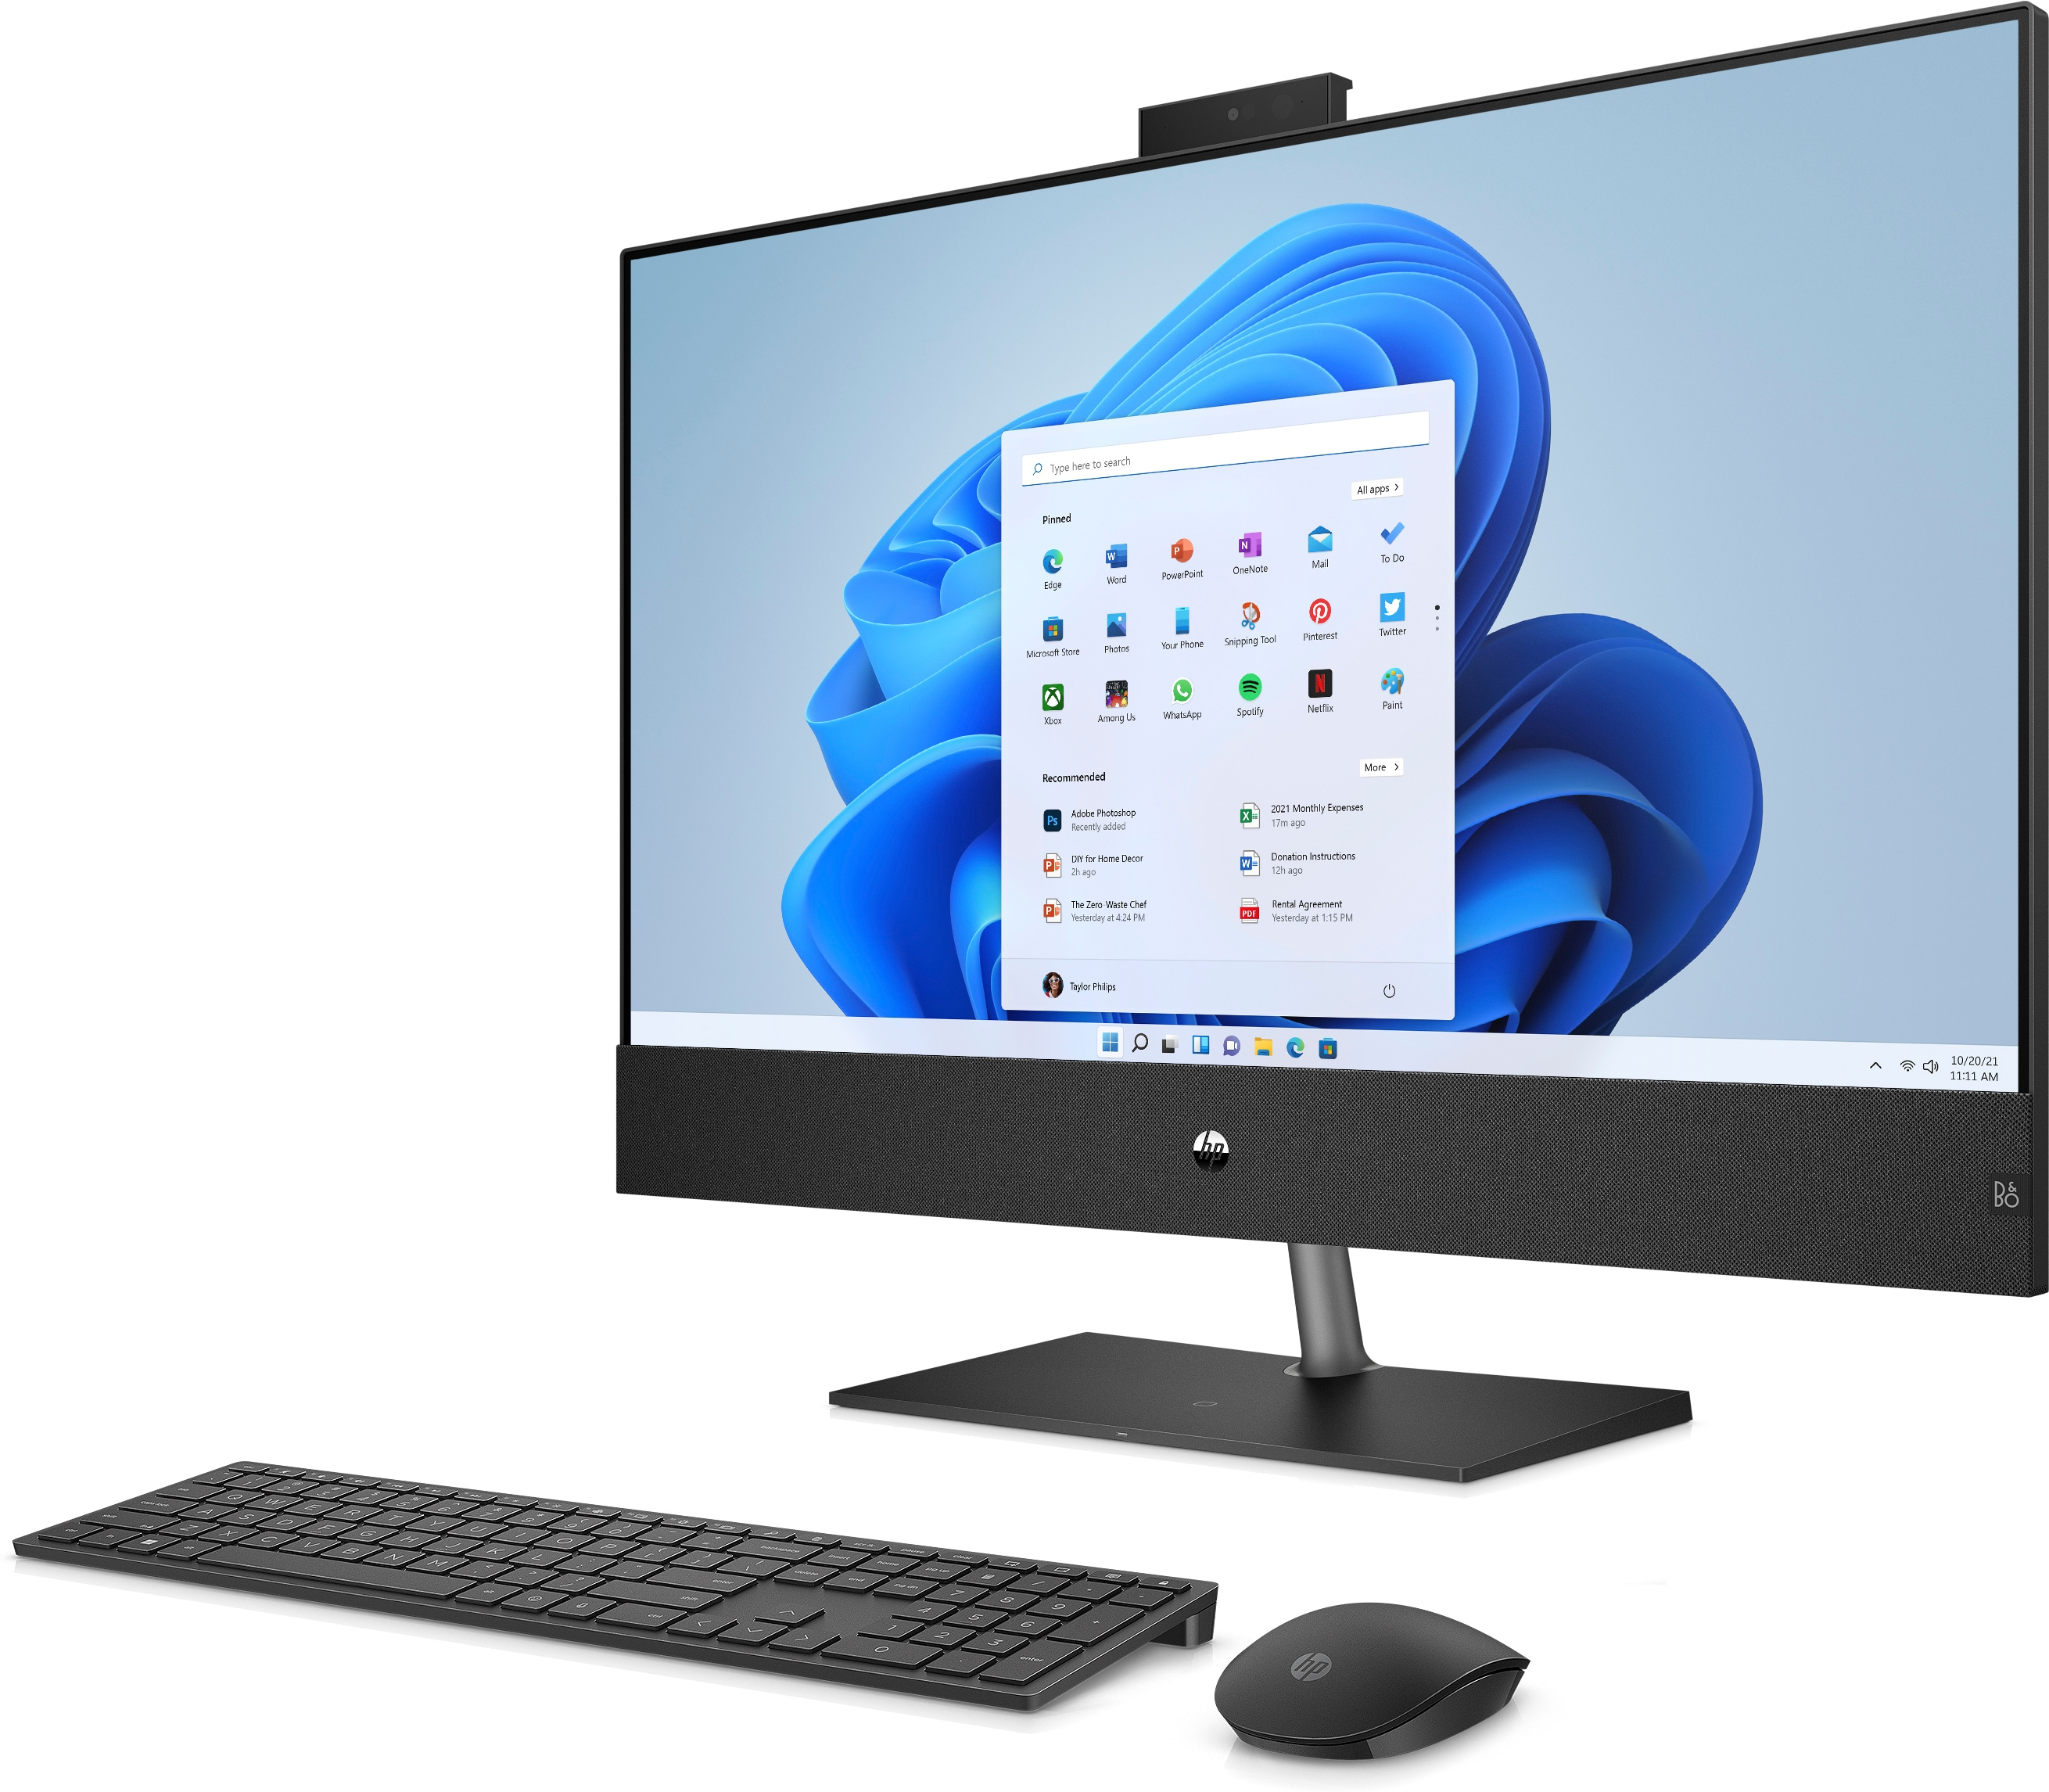 HP Pavilion 31.5 inch All-in-One Desktop PC 32-b1619ndBundle PC